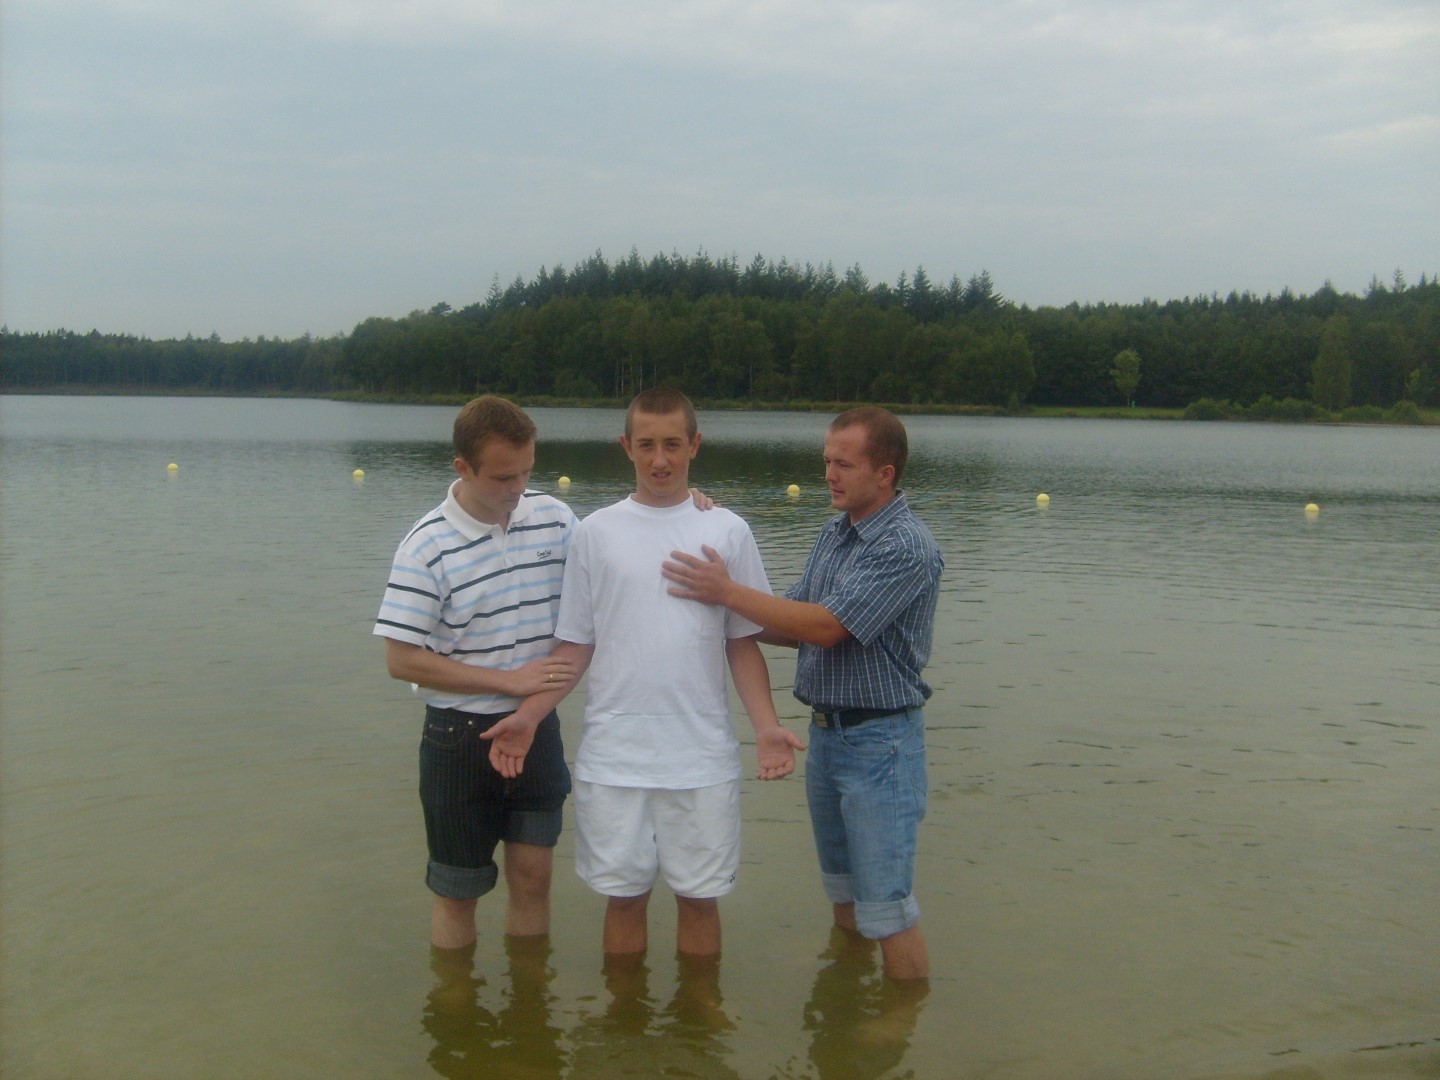 krst doop nederland heerder strand